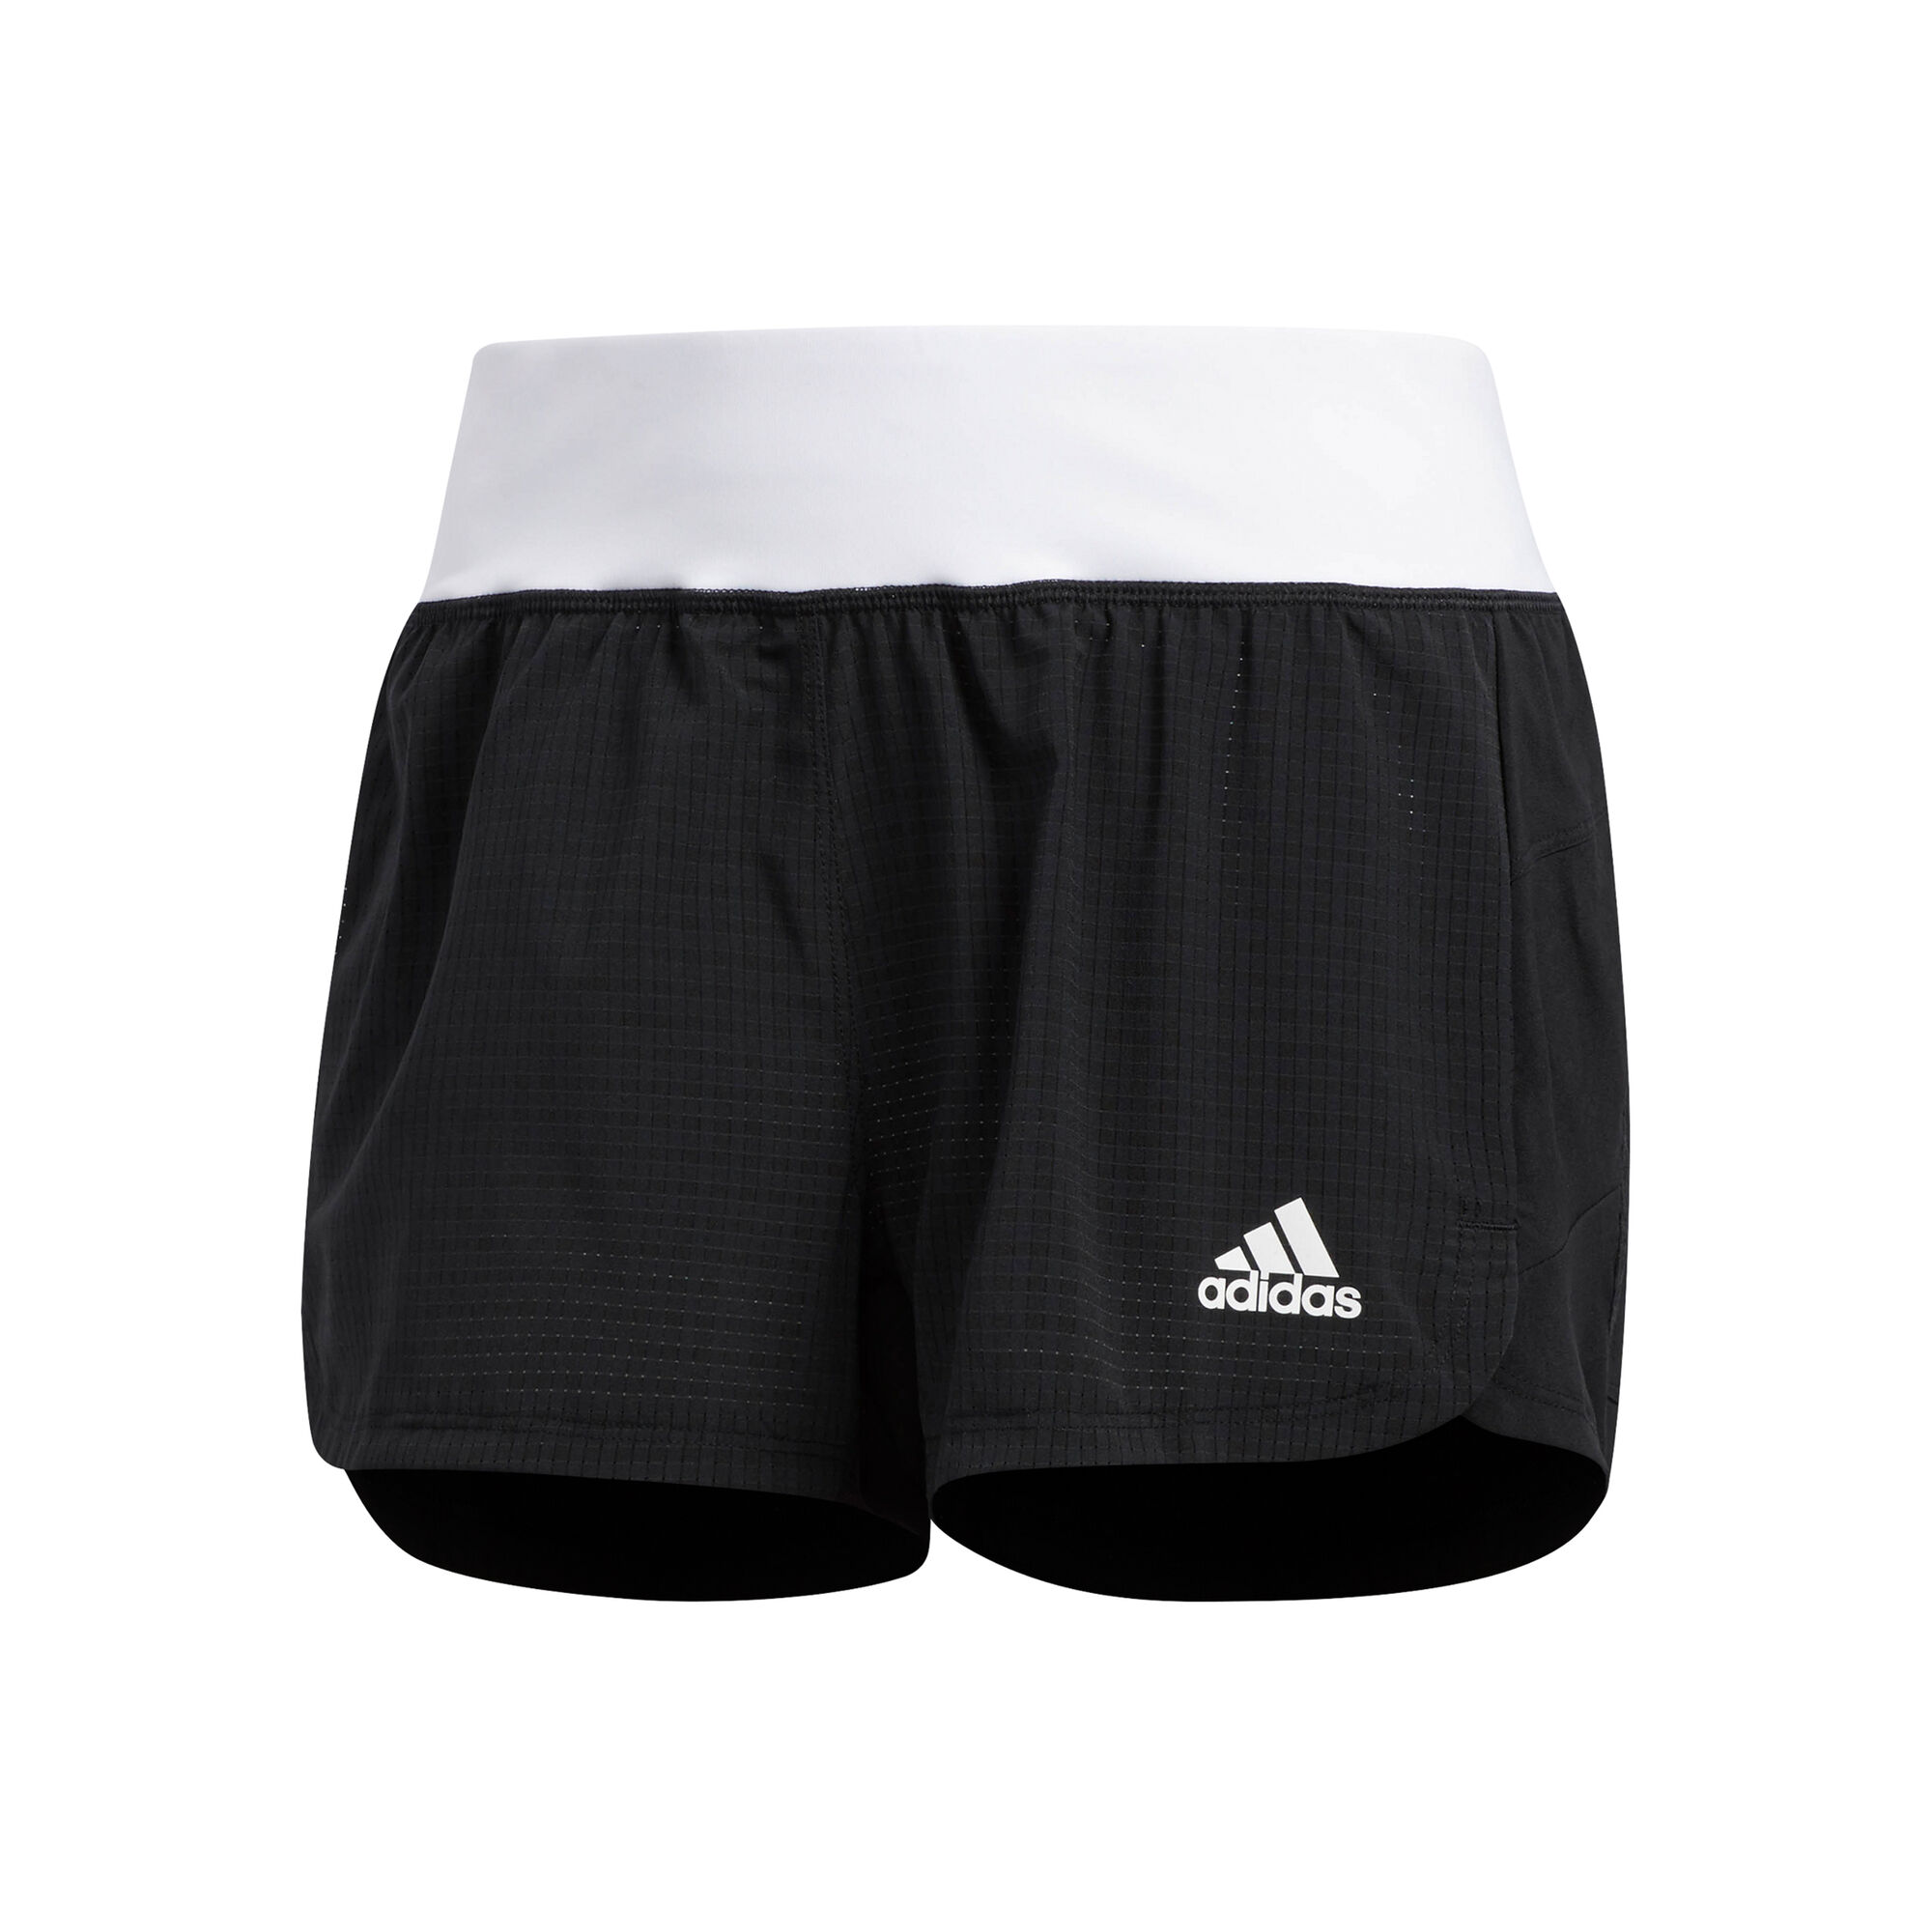 Buy adidas 2in1 Shorts Women Black, White online | Tennis Point UK